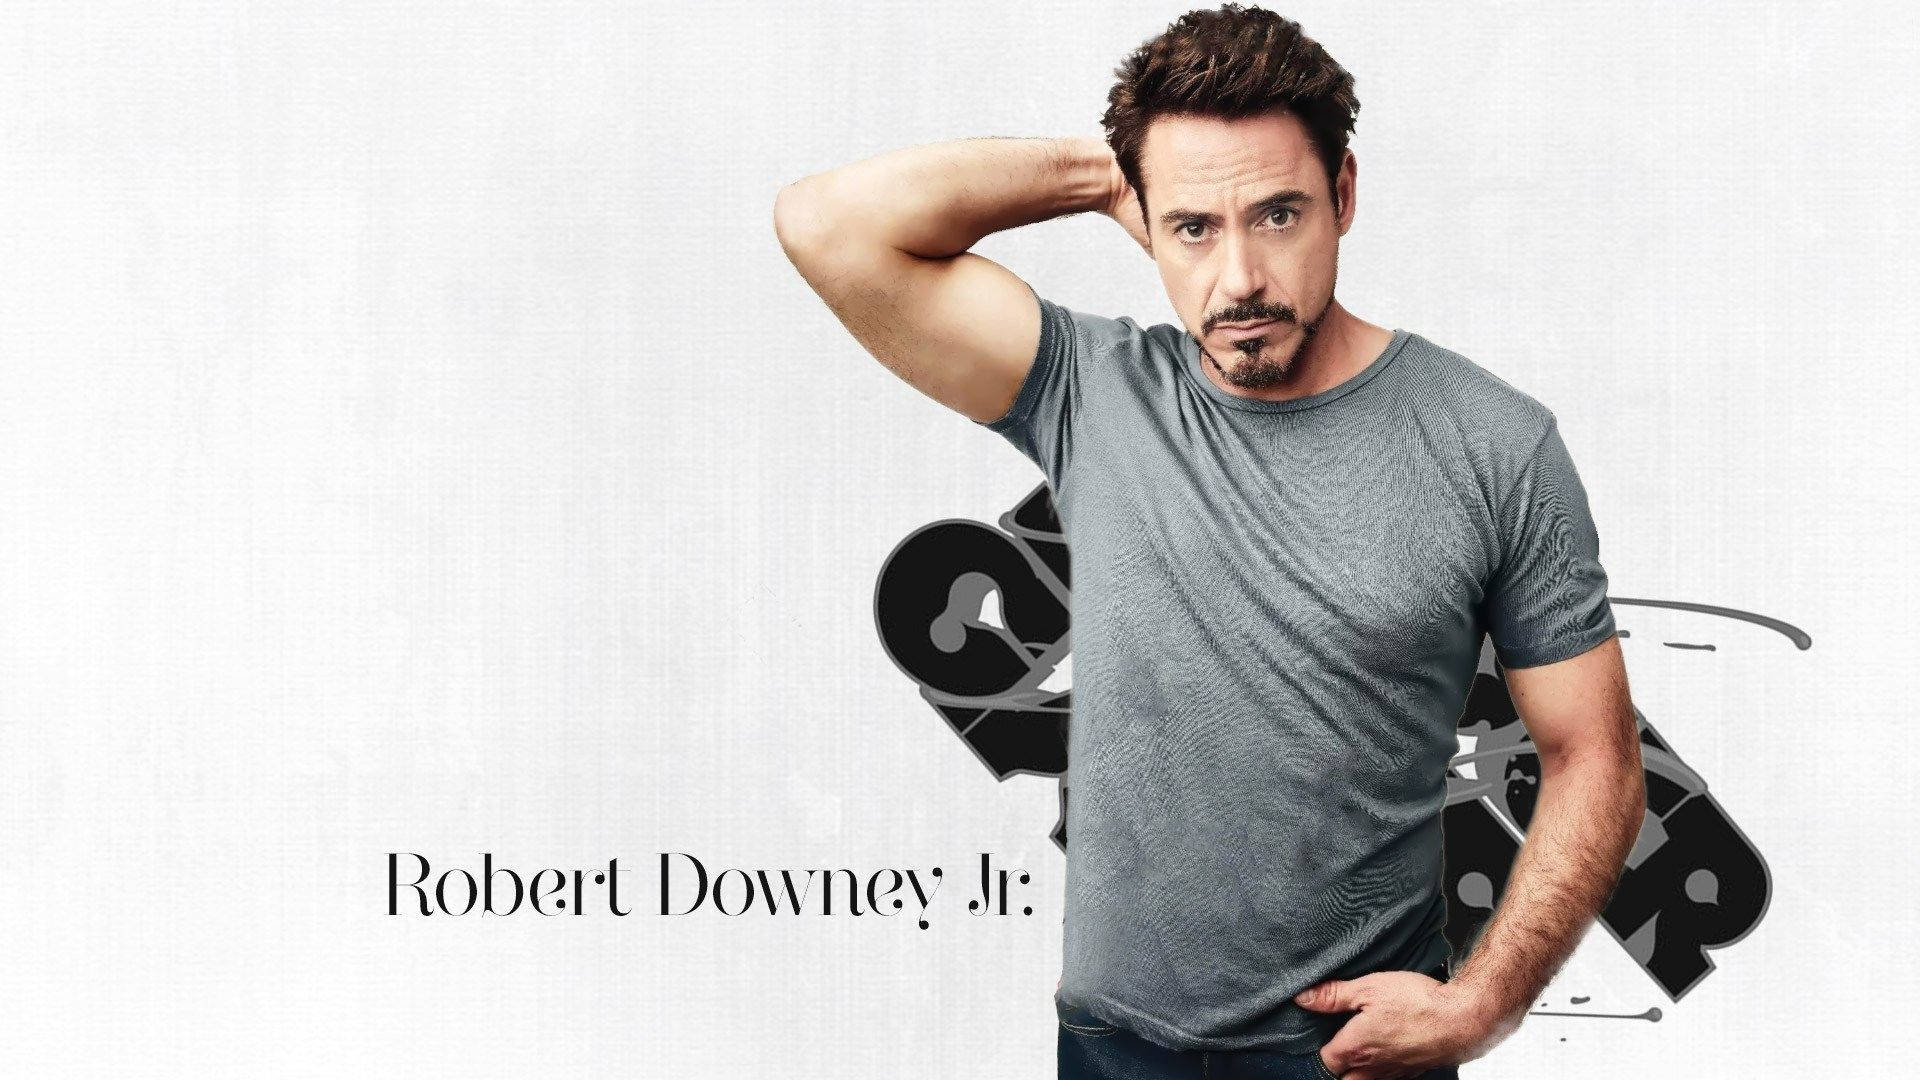 Robert Downey Jr. Model Pose Background